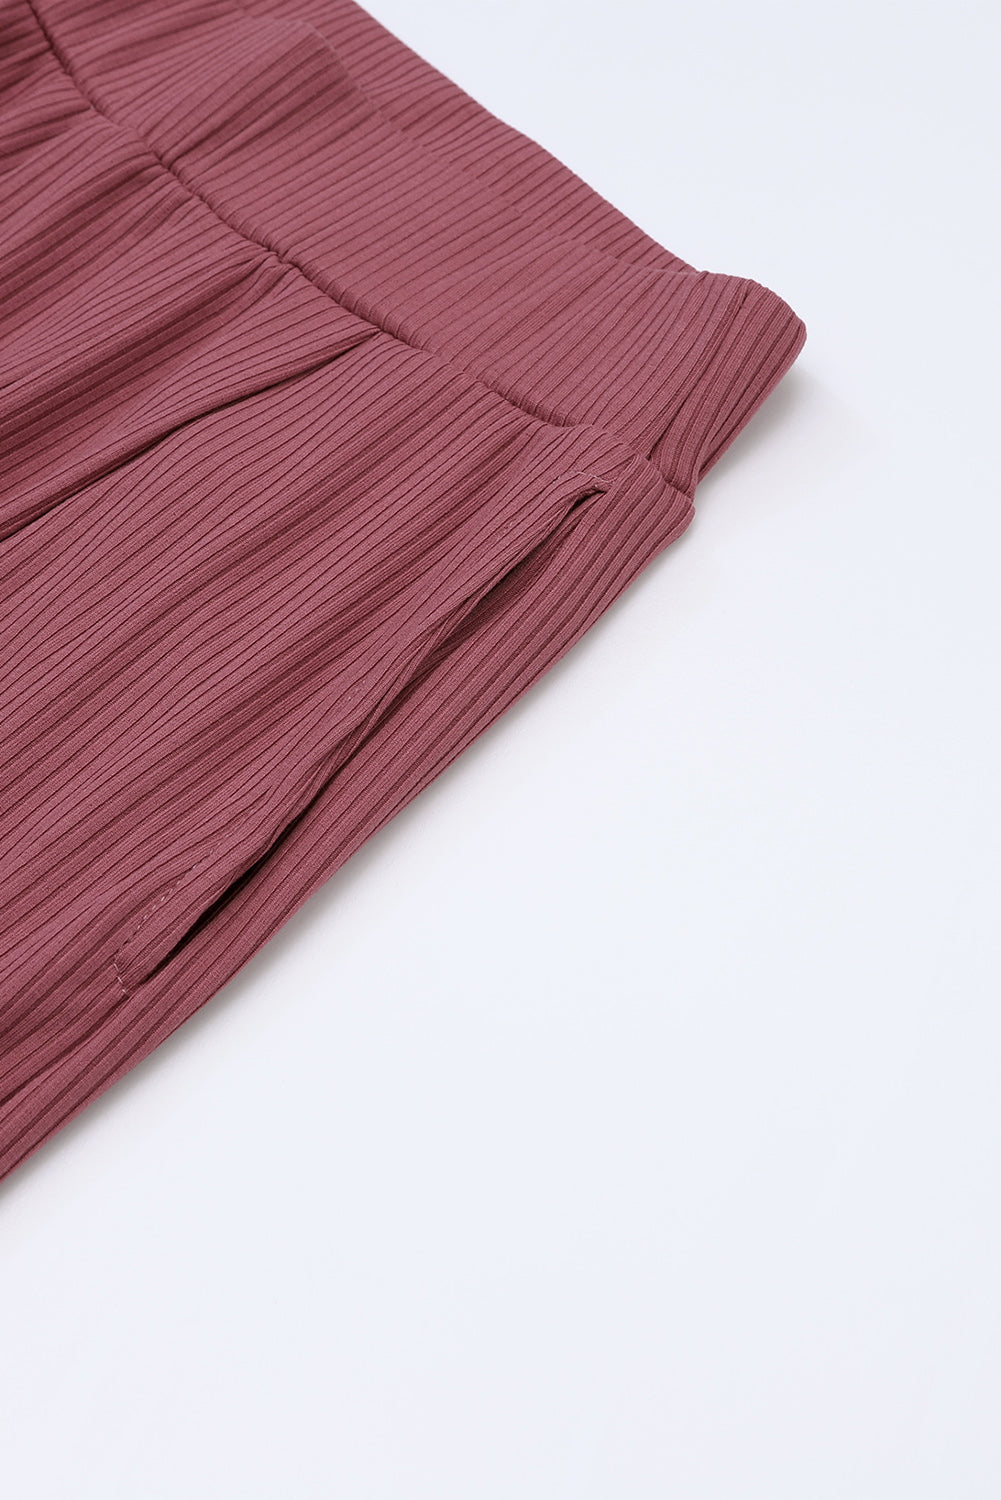 Solid Color Ribbed Crop Top Long Pants Set